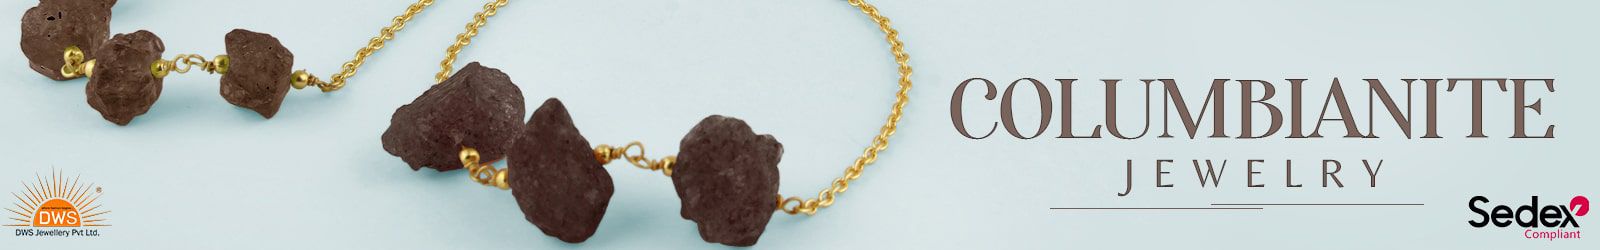 Wholesale Columbianite Jewelry